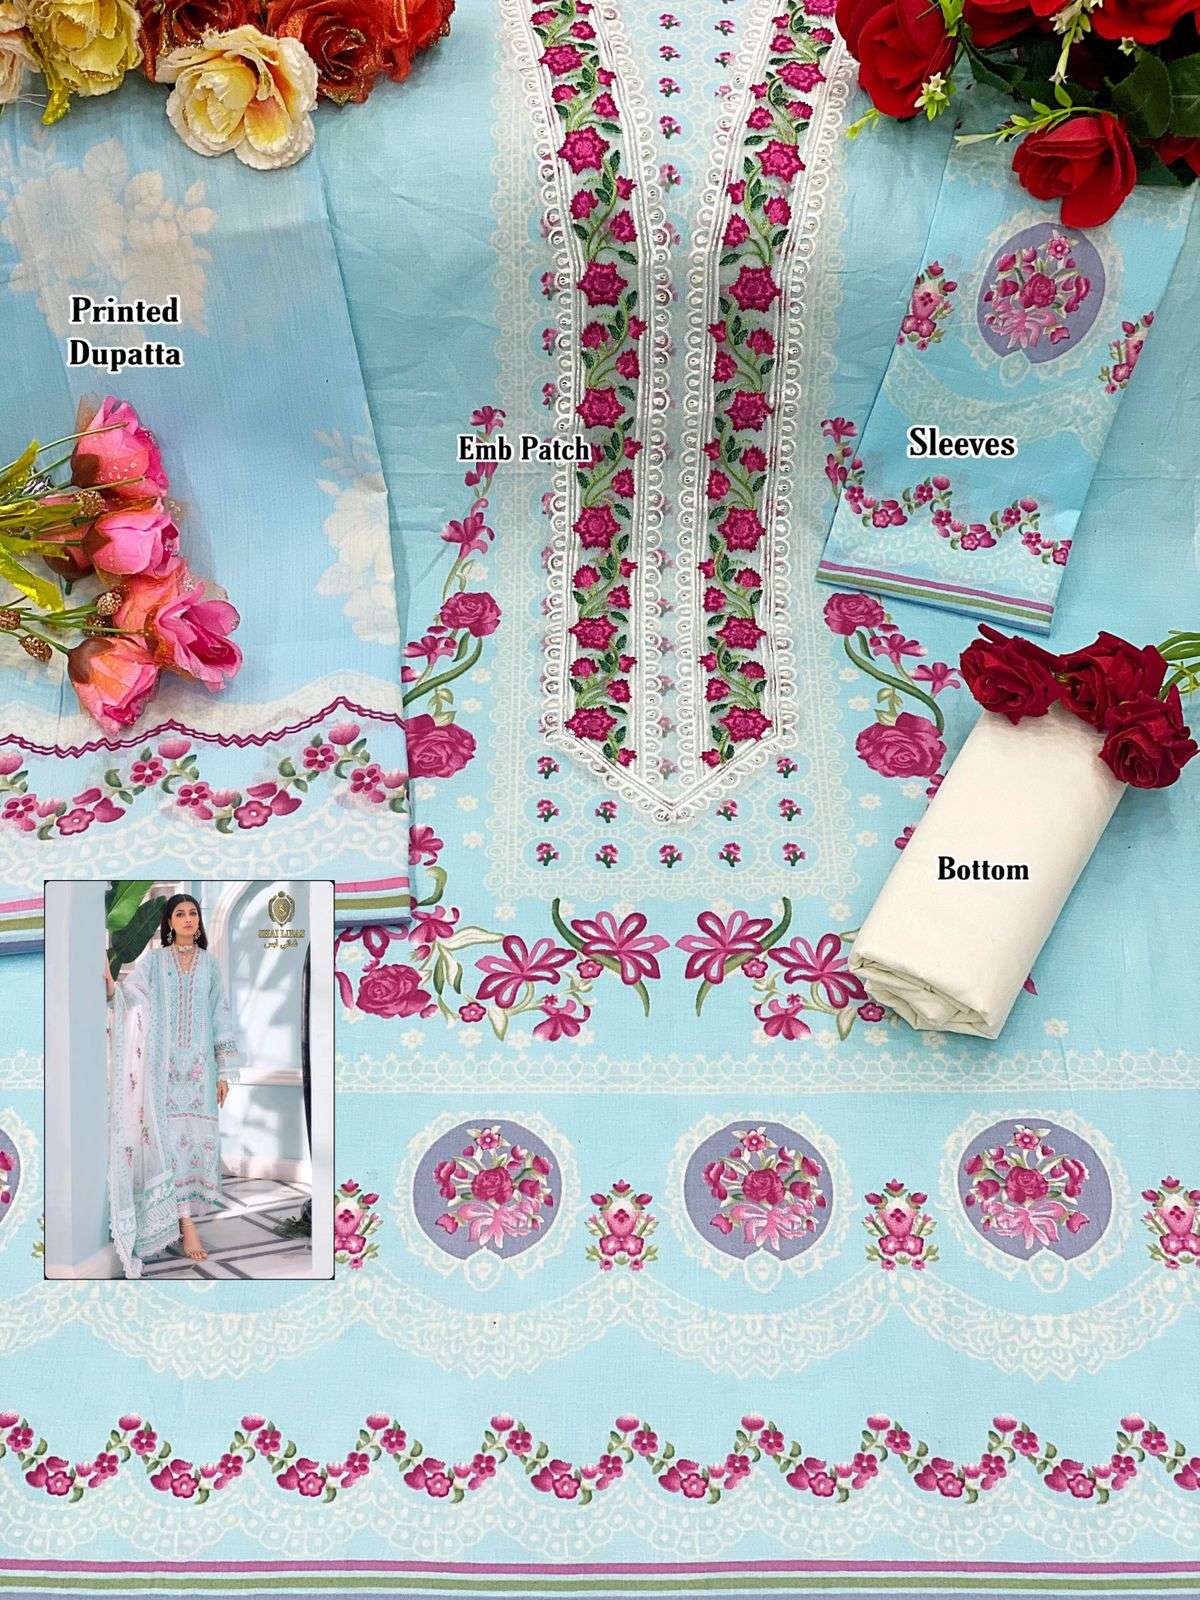 anaya by shai libas cambric cotton designer salwar kameez wholesale price